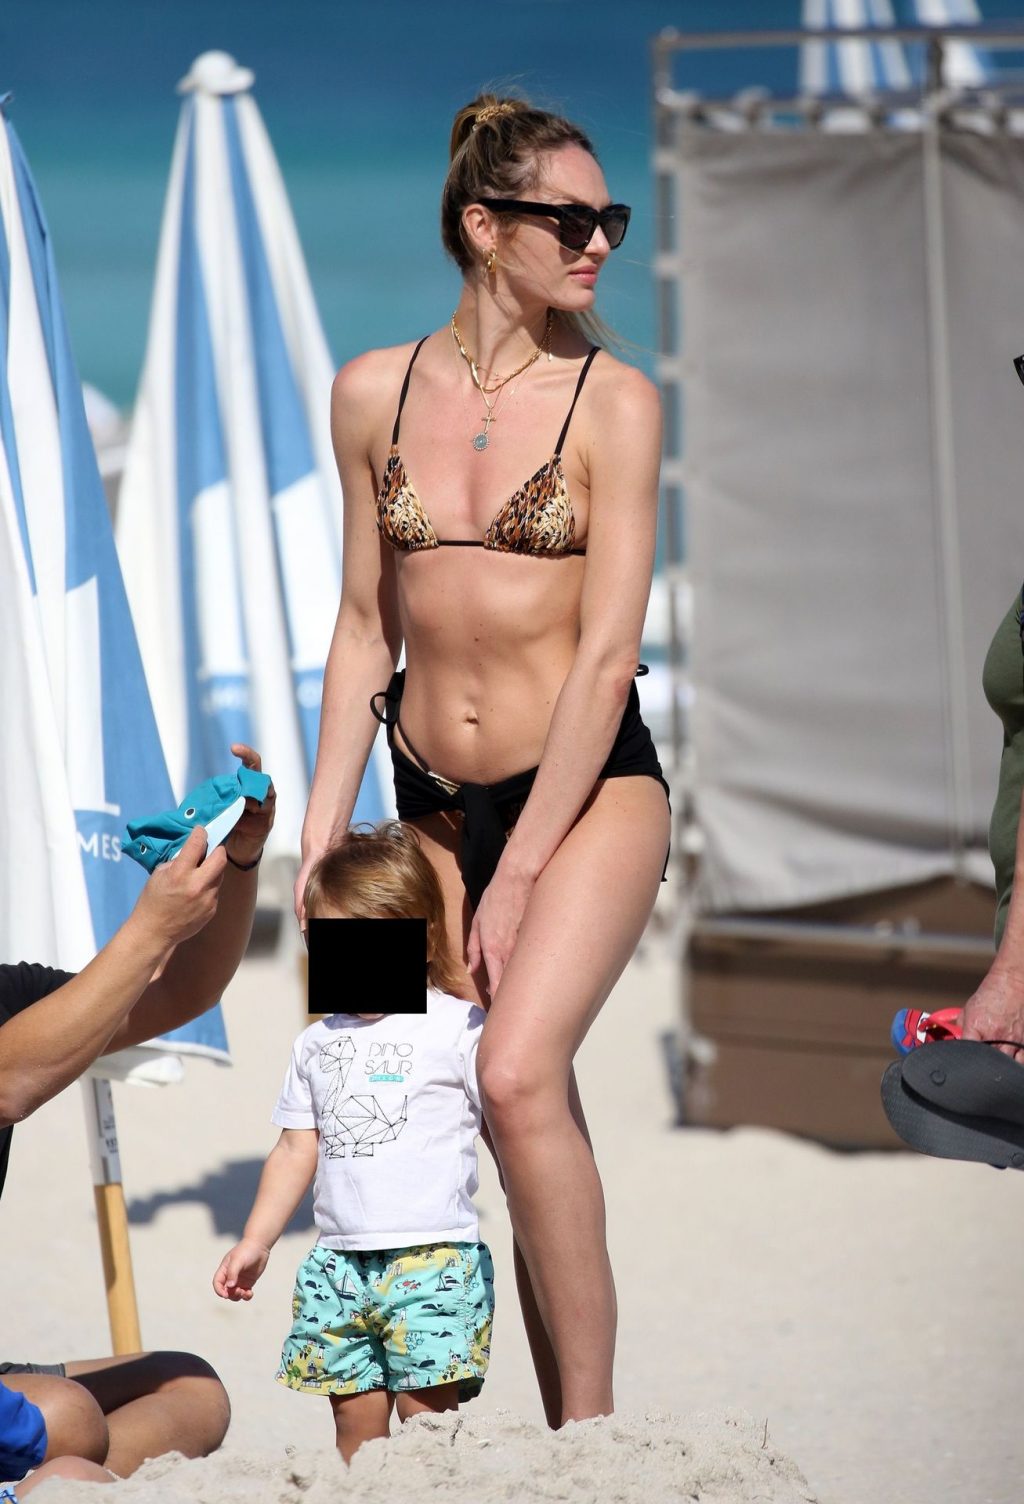 Candice Swanepoel &amp; Lais Ribeiro Both Wear Tiny Leopard Print Bikinis on the Beach in Miami (69 Photos)